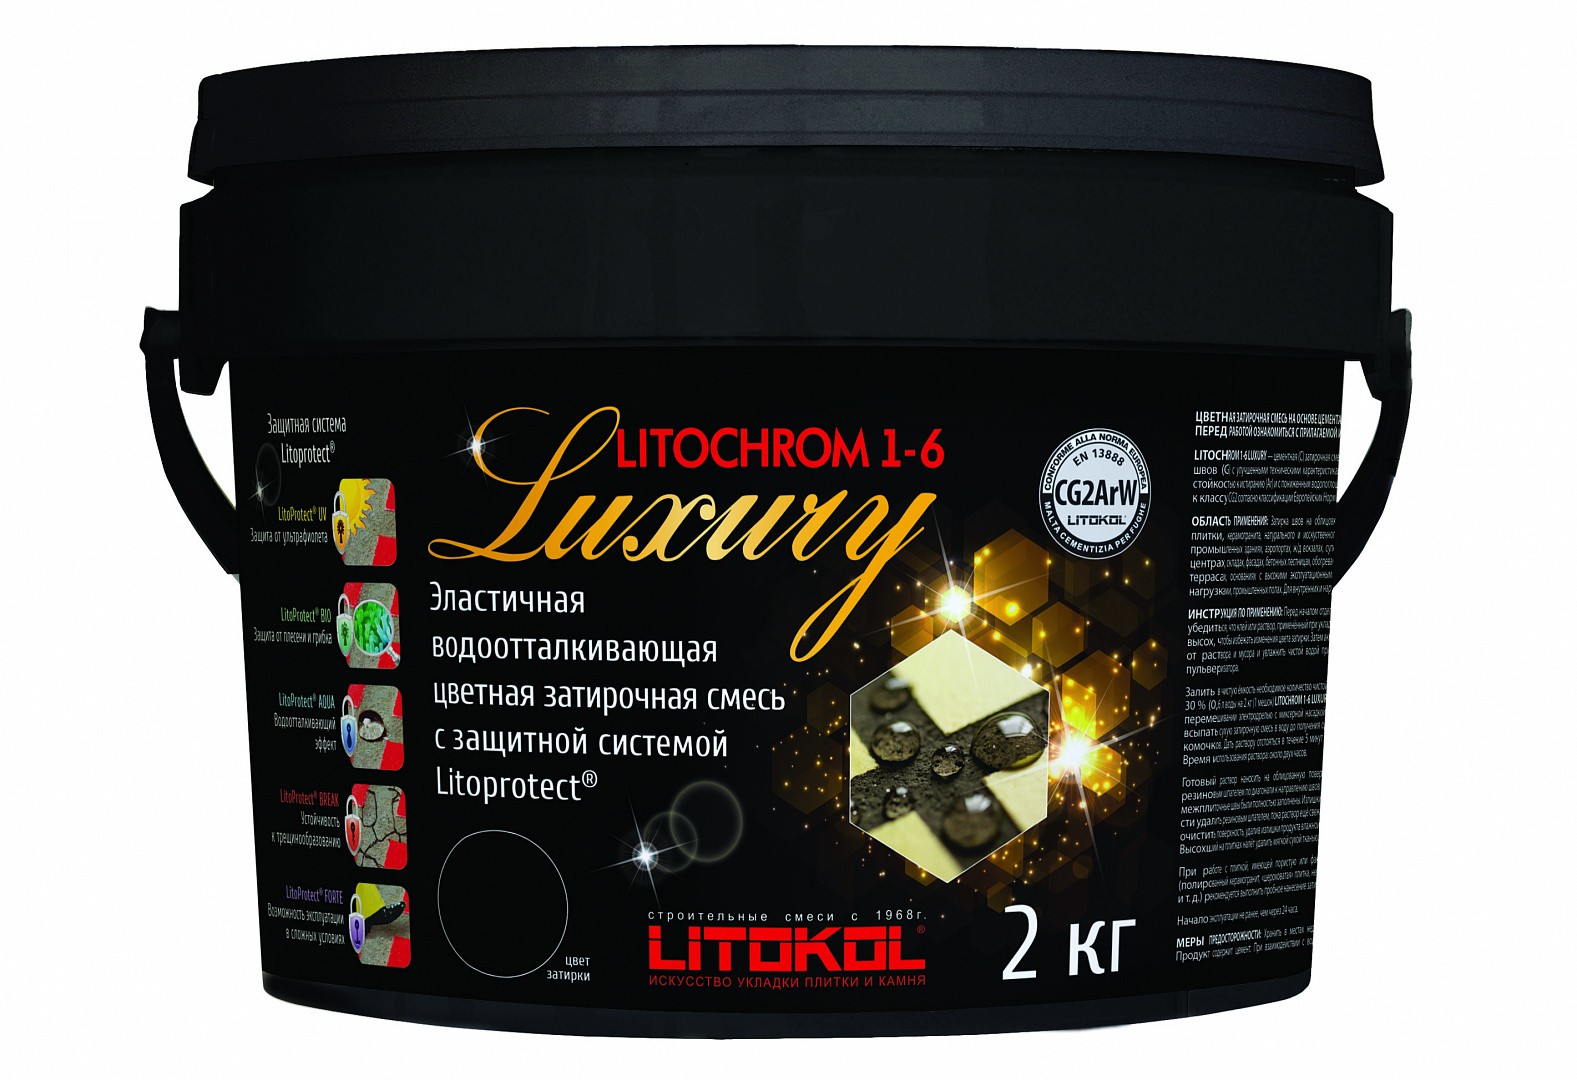 Цементная затирочная смесь LITOCHROM 1-6 LUXURY C.620